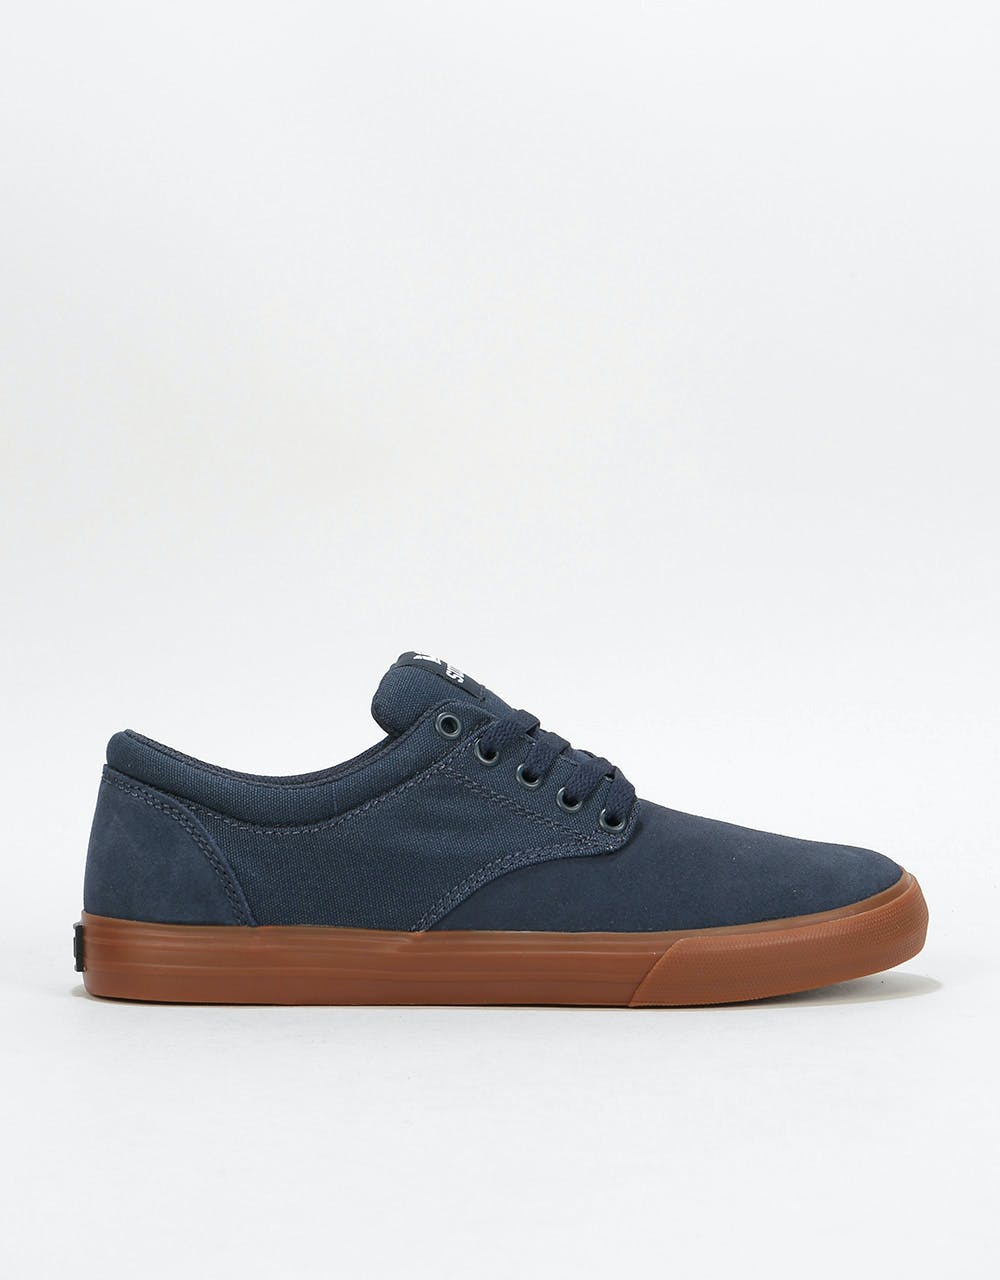 Supra Chino Skate Shoes - Navy/Navy-Gum